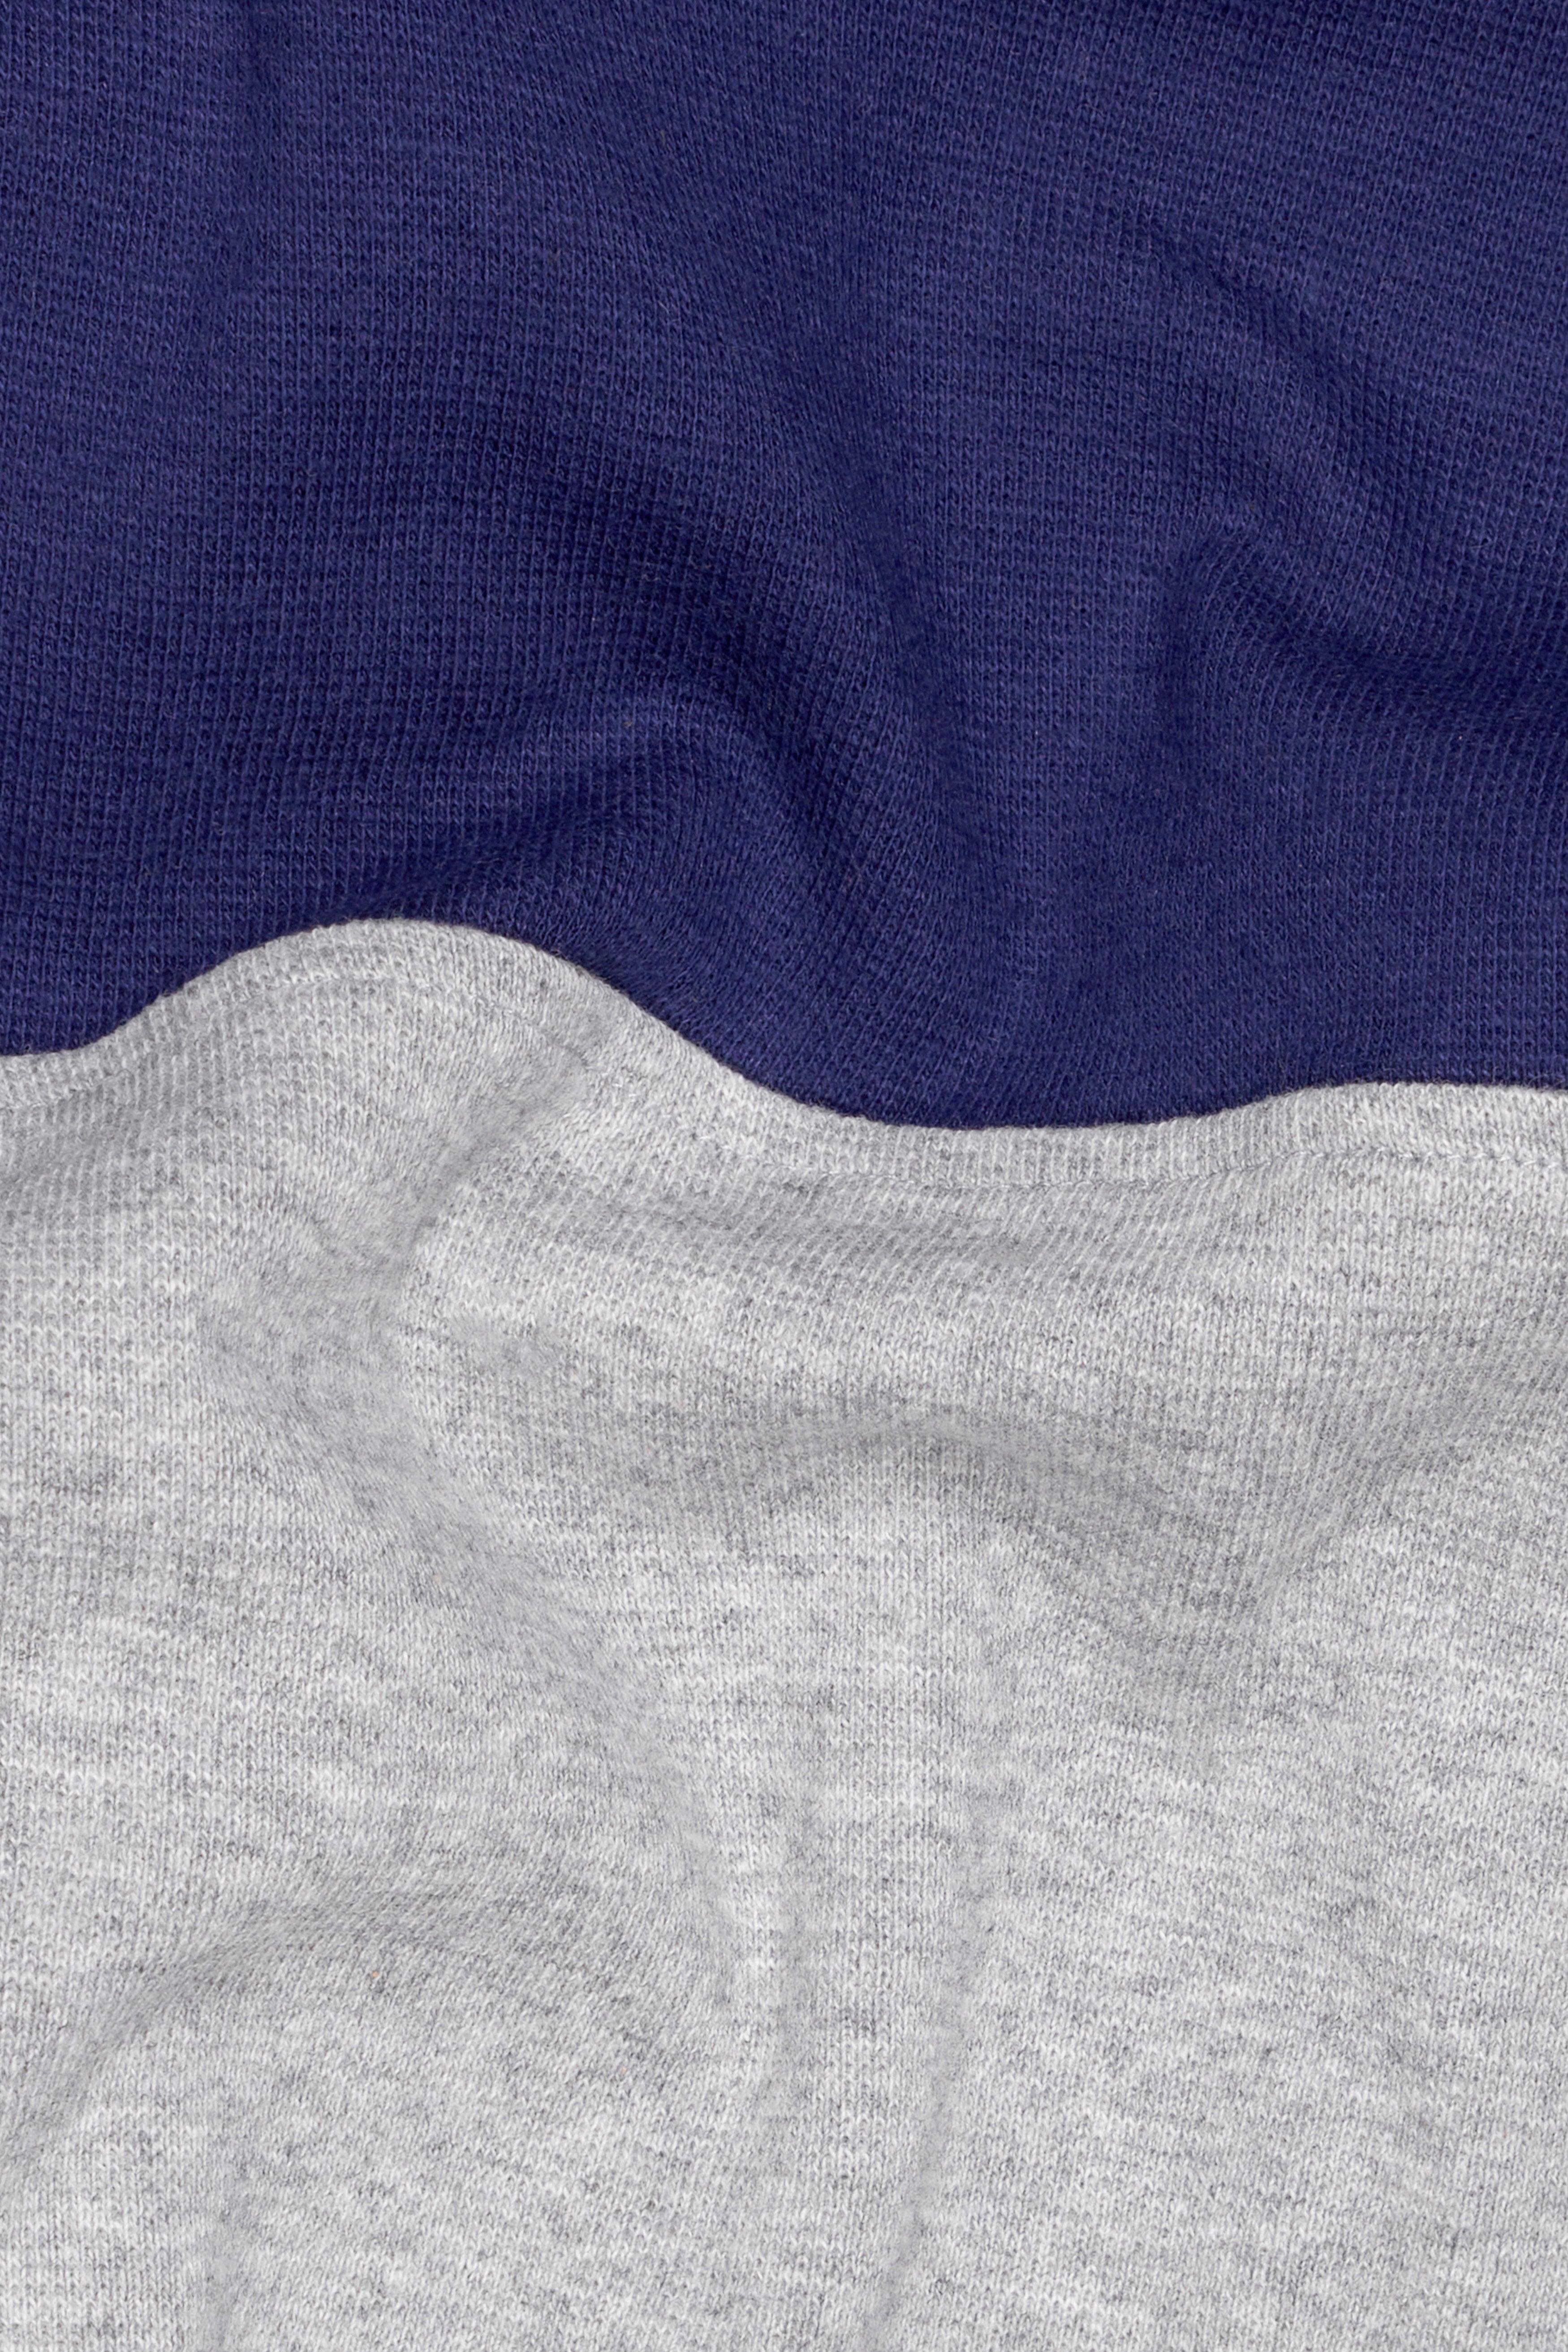 Timberwolf Gray and Rhino Blue Premium Cotton Jersey T-Shirt TS919-S, TS919-M, TS919-L, TS919-XL, TS919-XXL